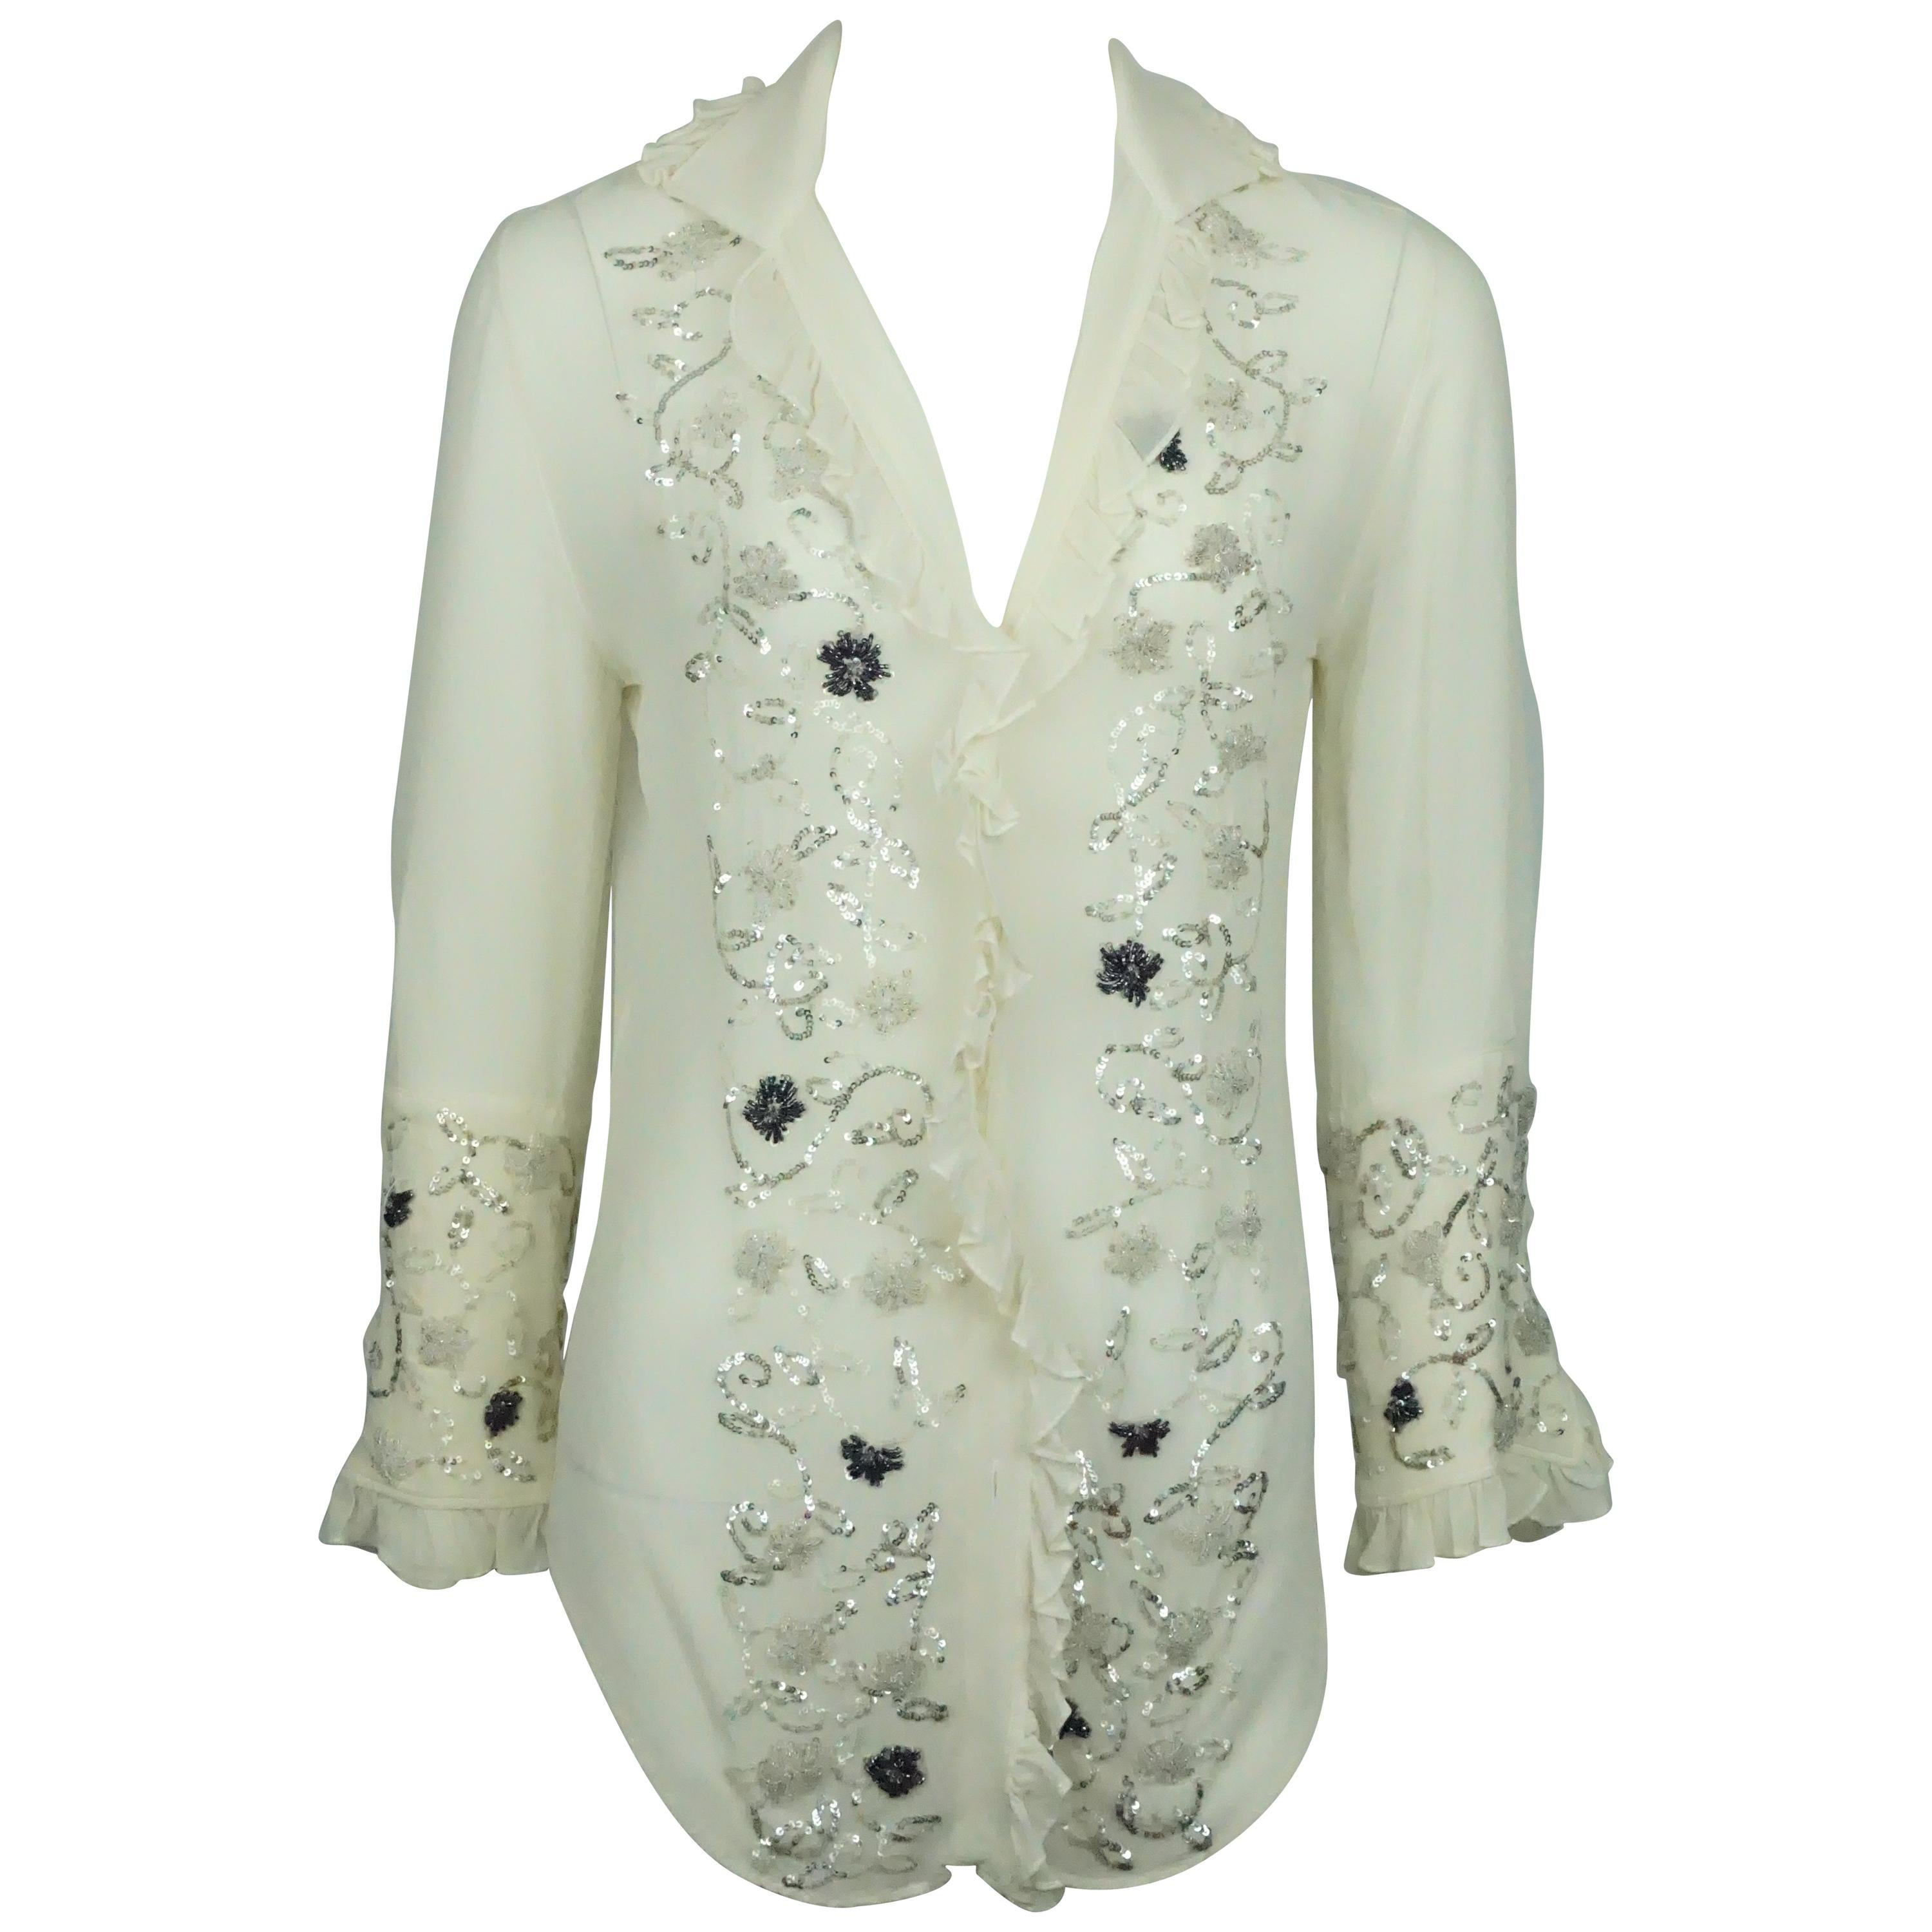 Dolce & Gabbana Ivory Silk Chiffon Top w/ Beaded Details - Medium